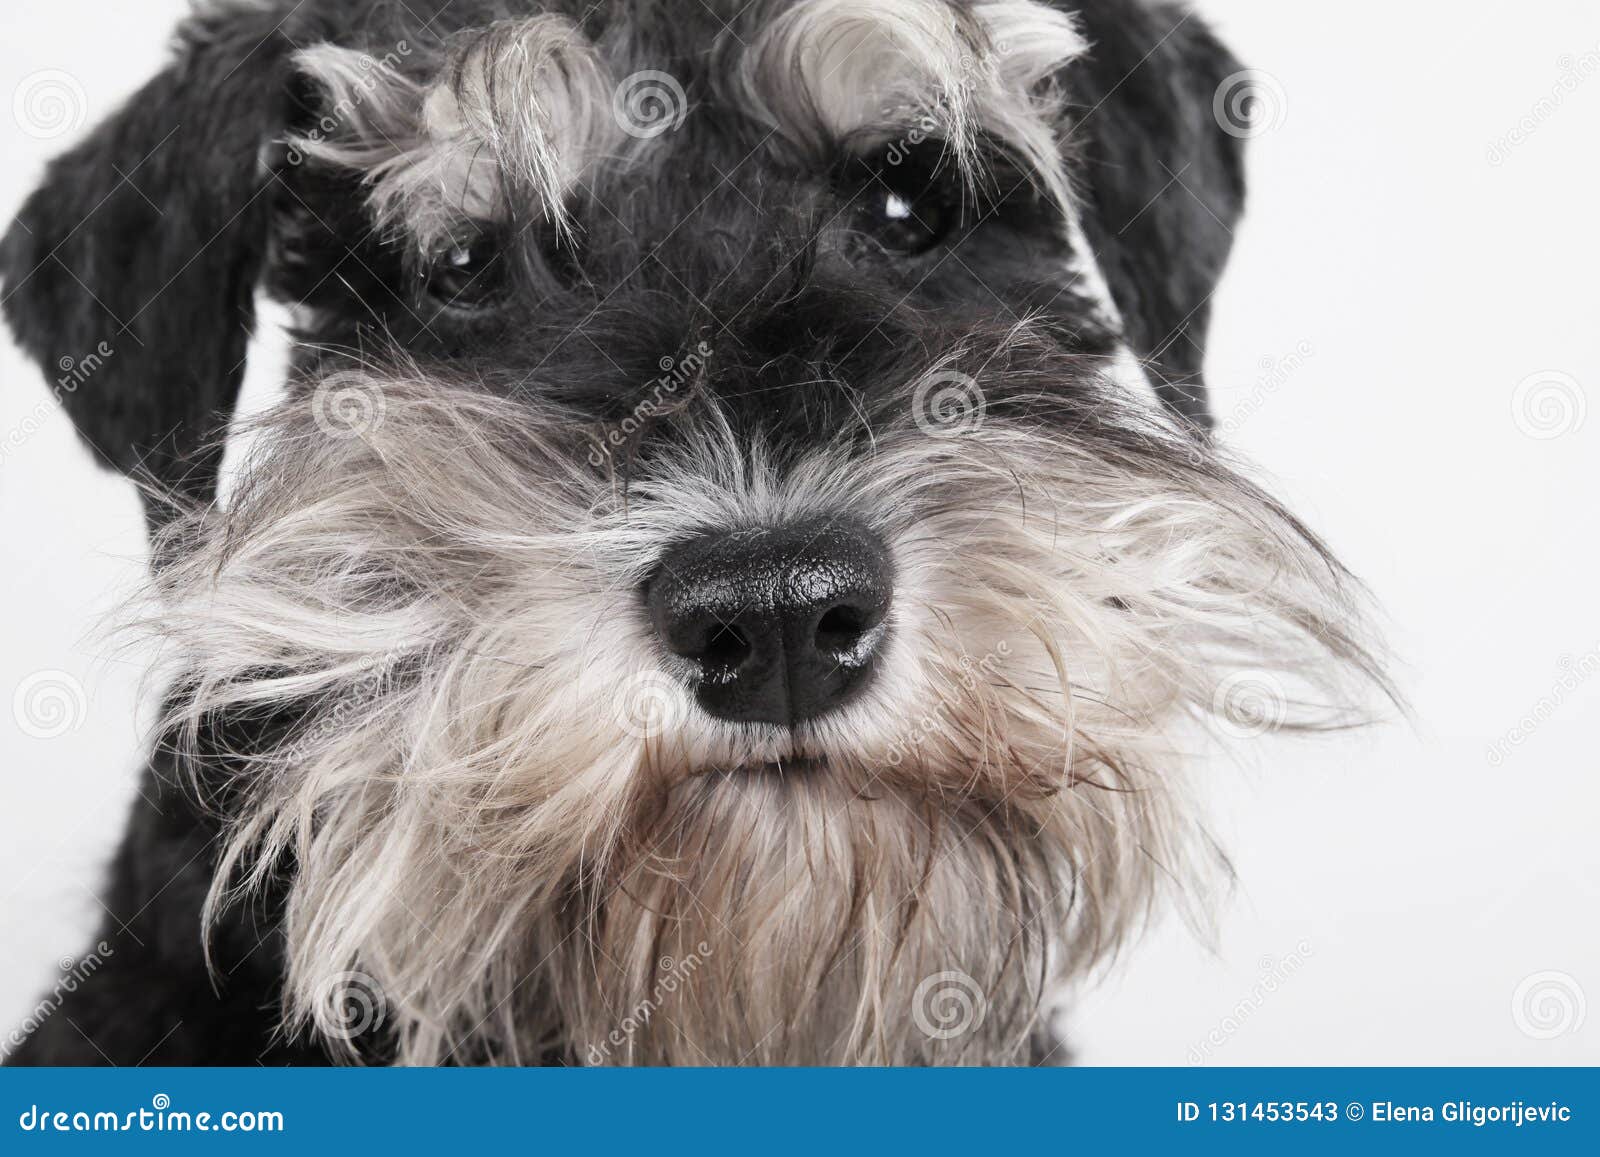 Miniature Schnauzer Puppy Dog On White Background Stock Image Image Of Breed Adorable 131453543